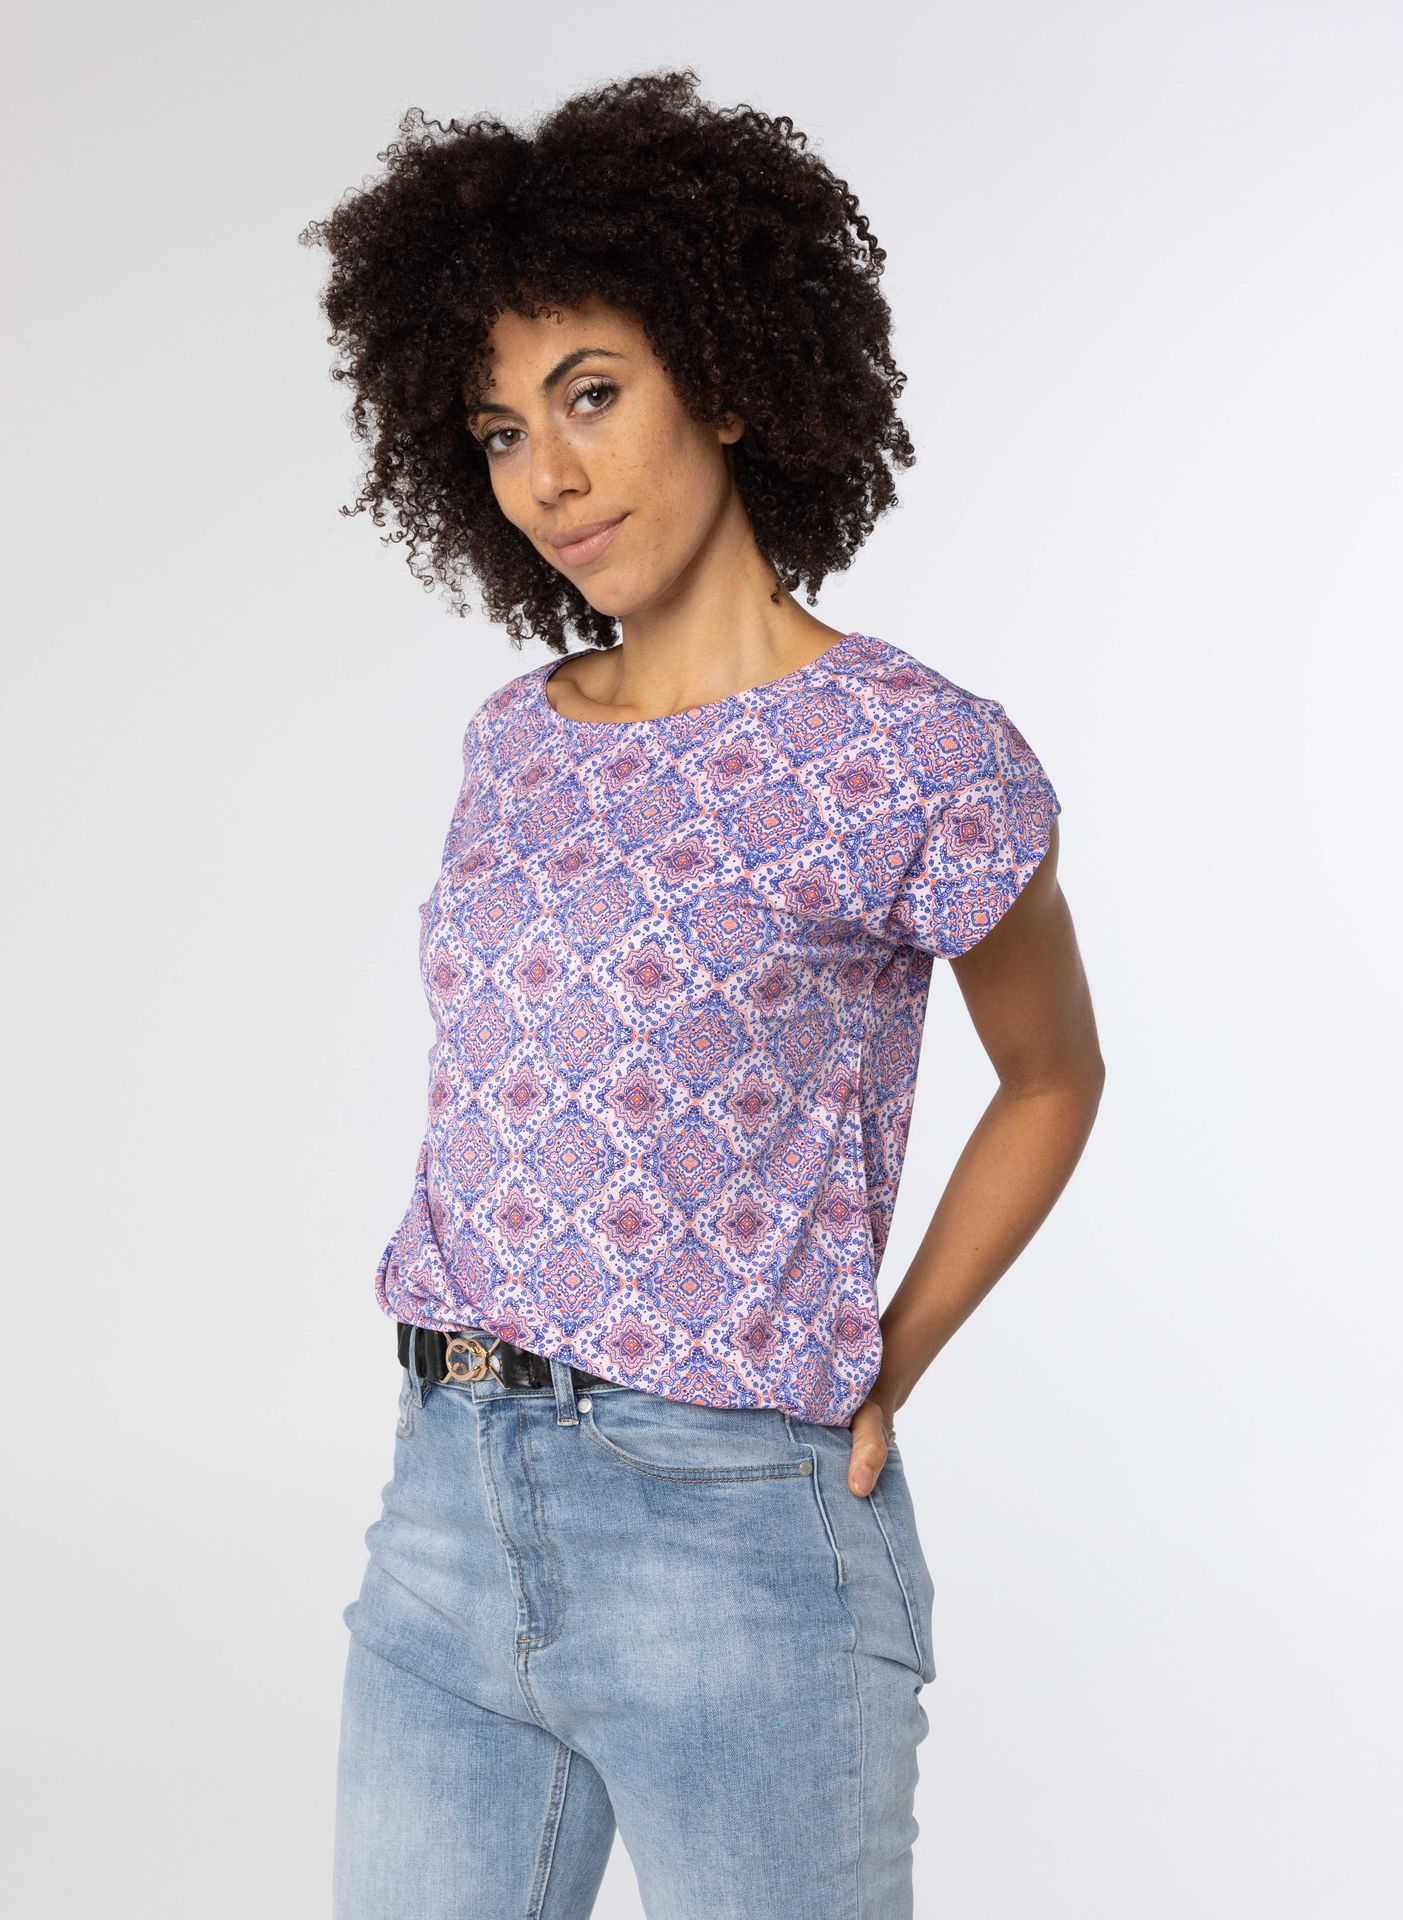 Norah Roze shirt met print blue/pink 213619-439